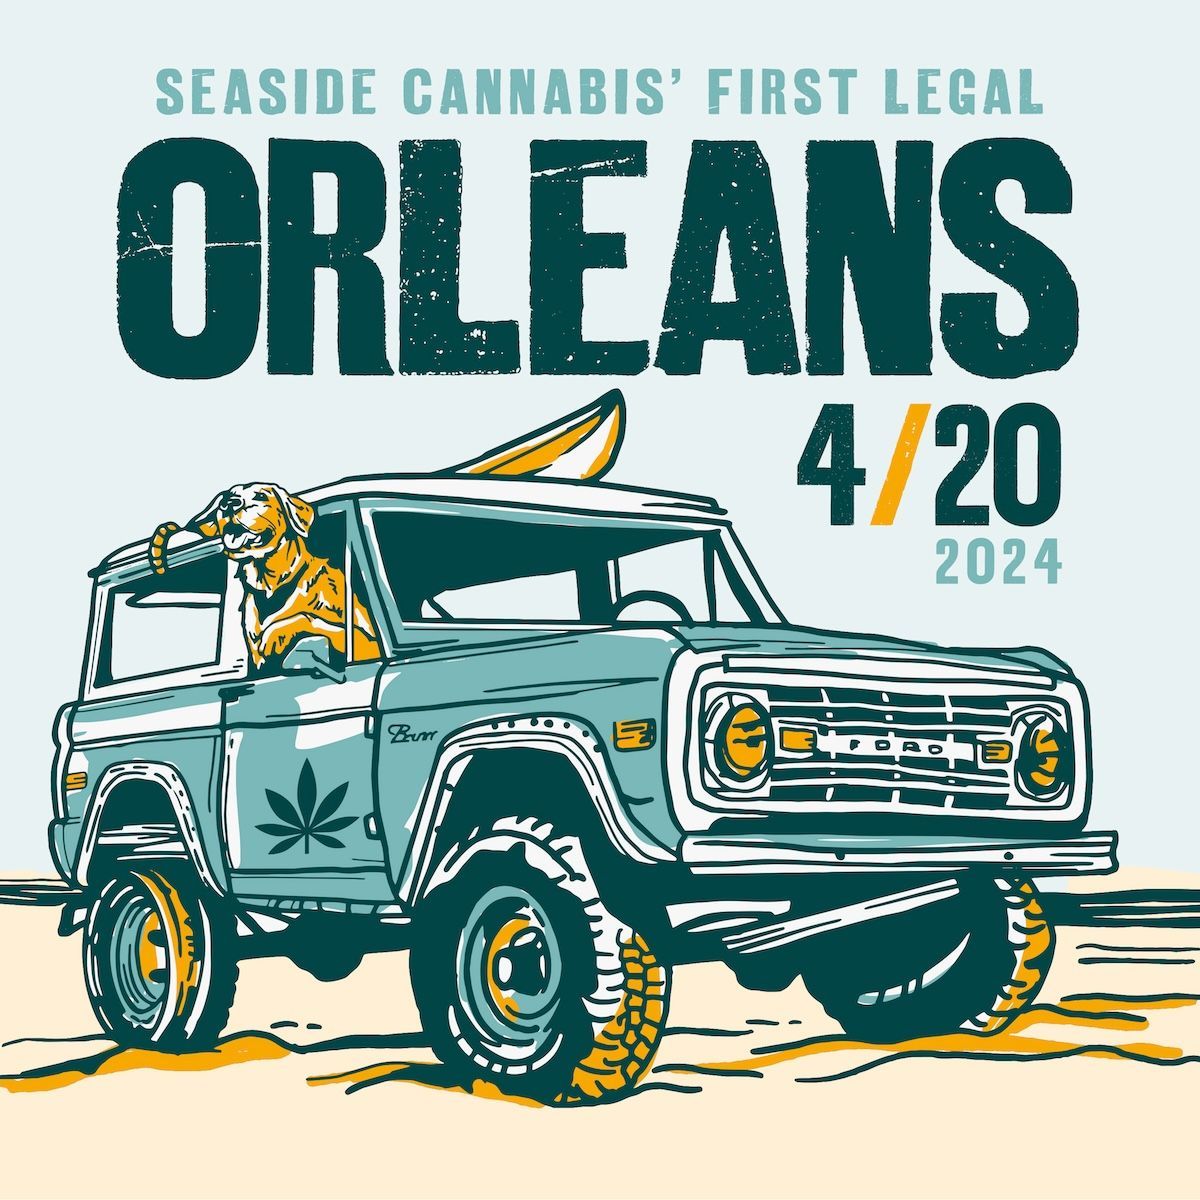 Seaside Cannabis Company Orleans Cape Cod 